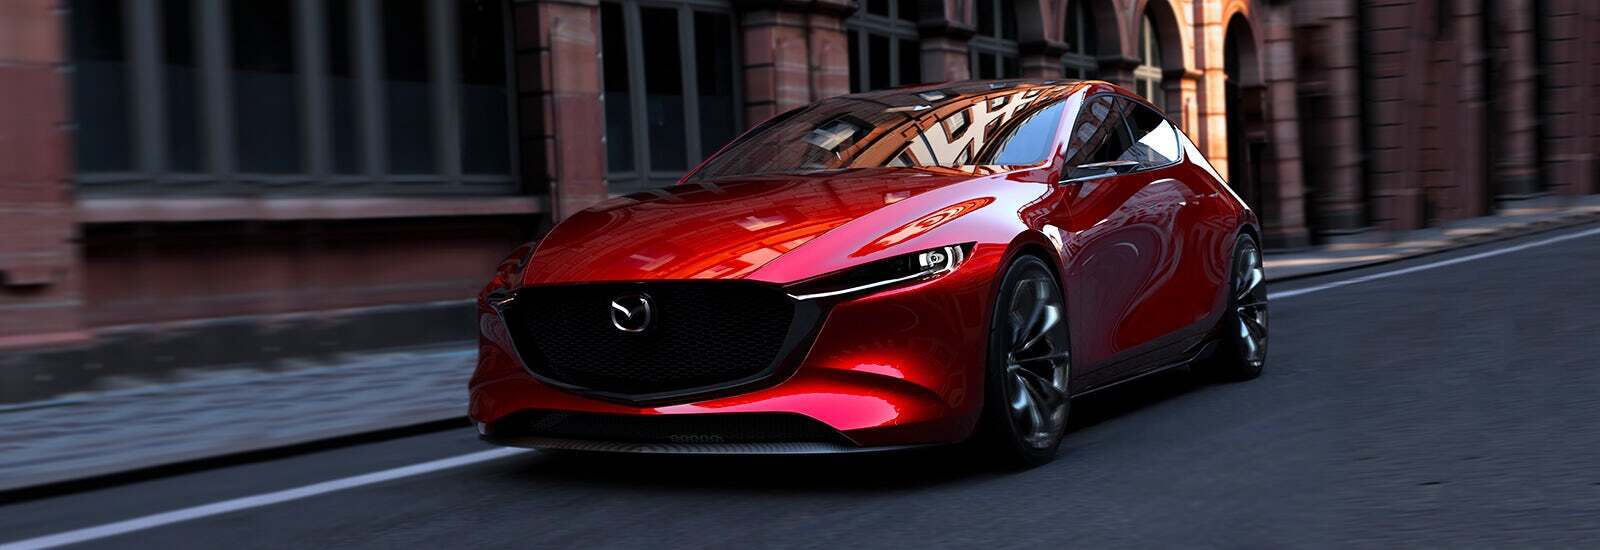 All New Mazda 3